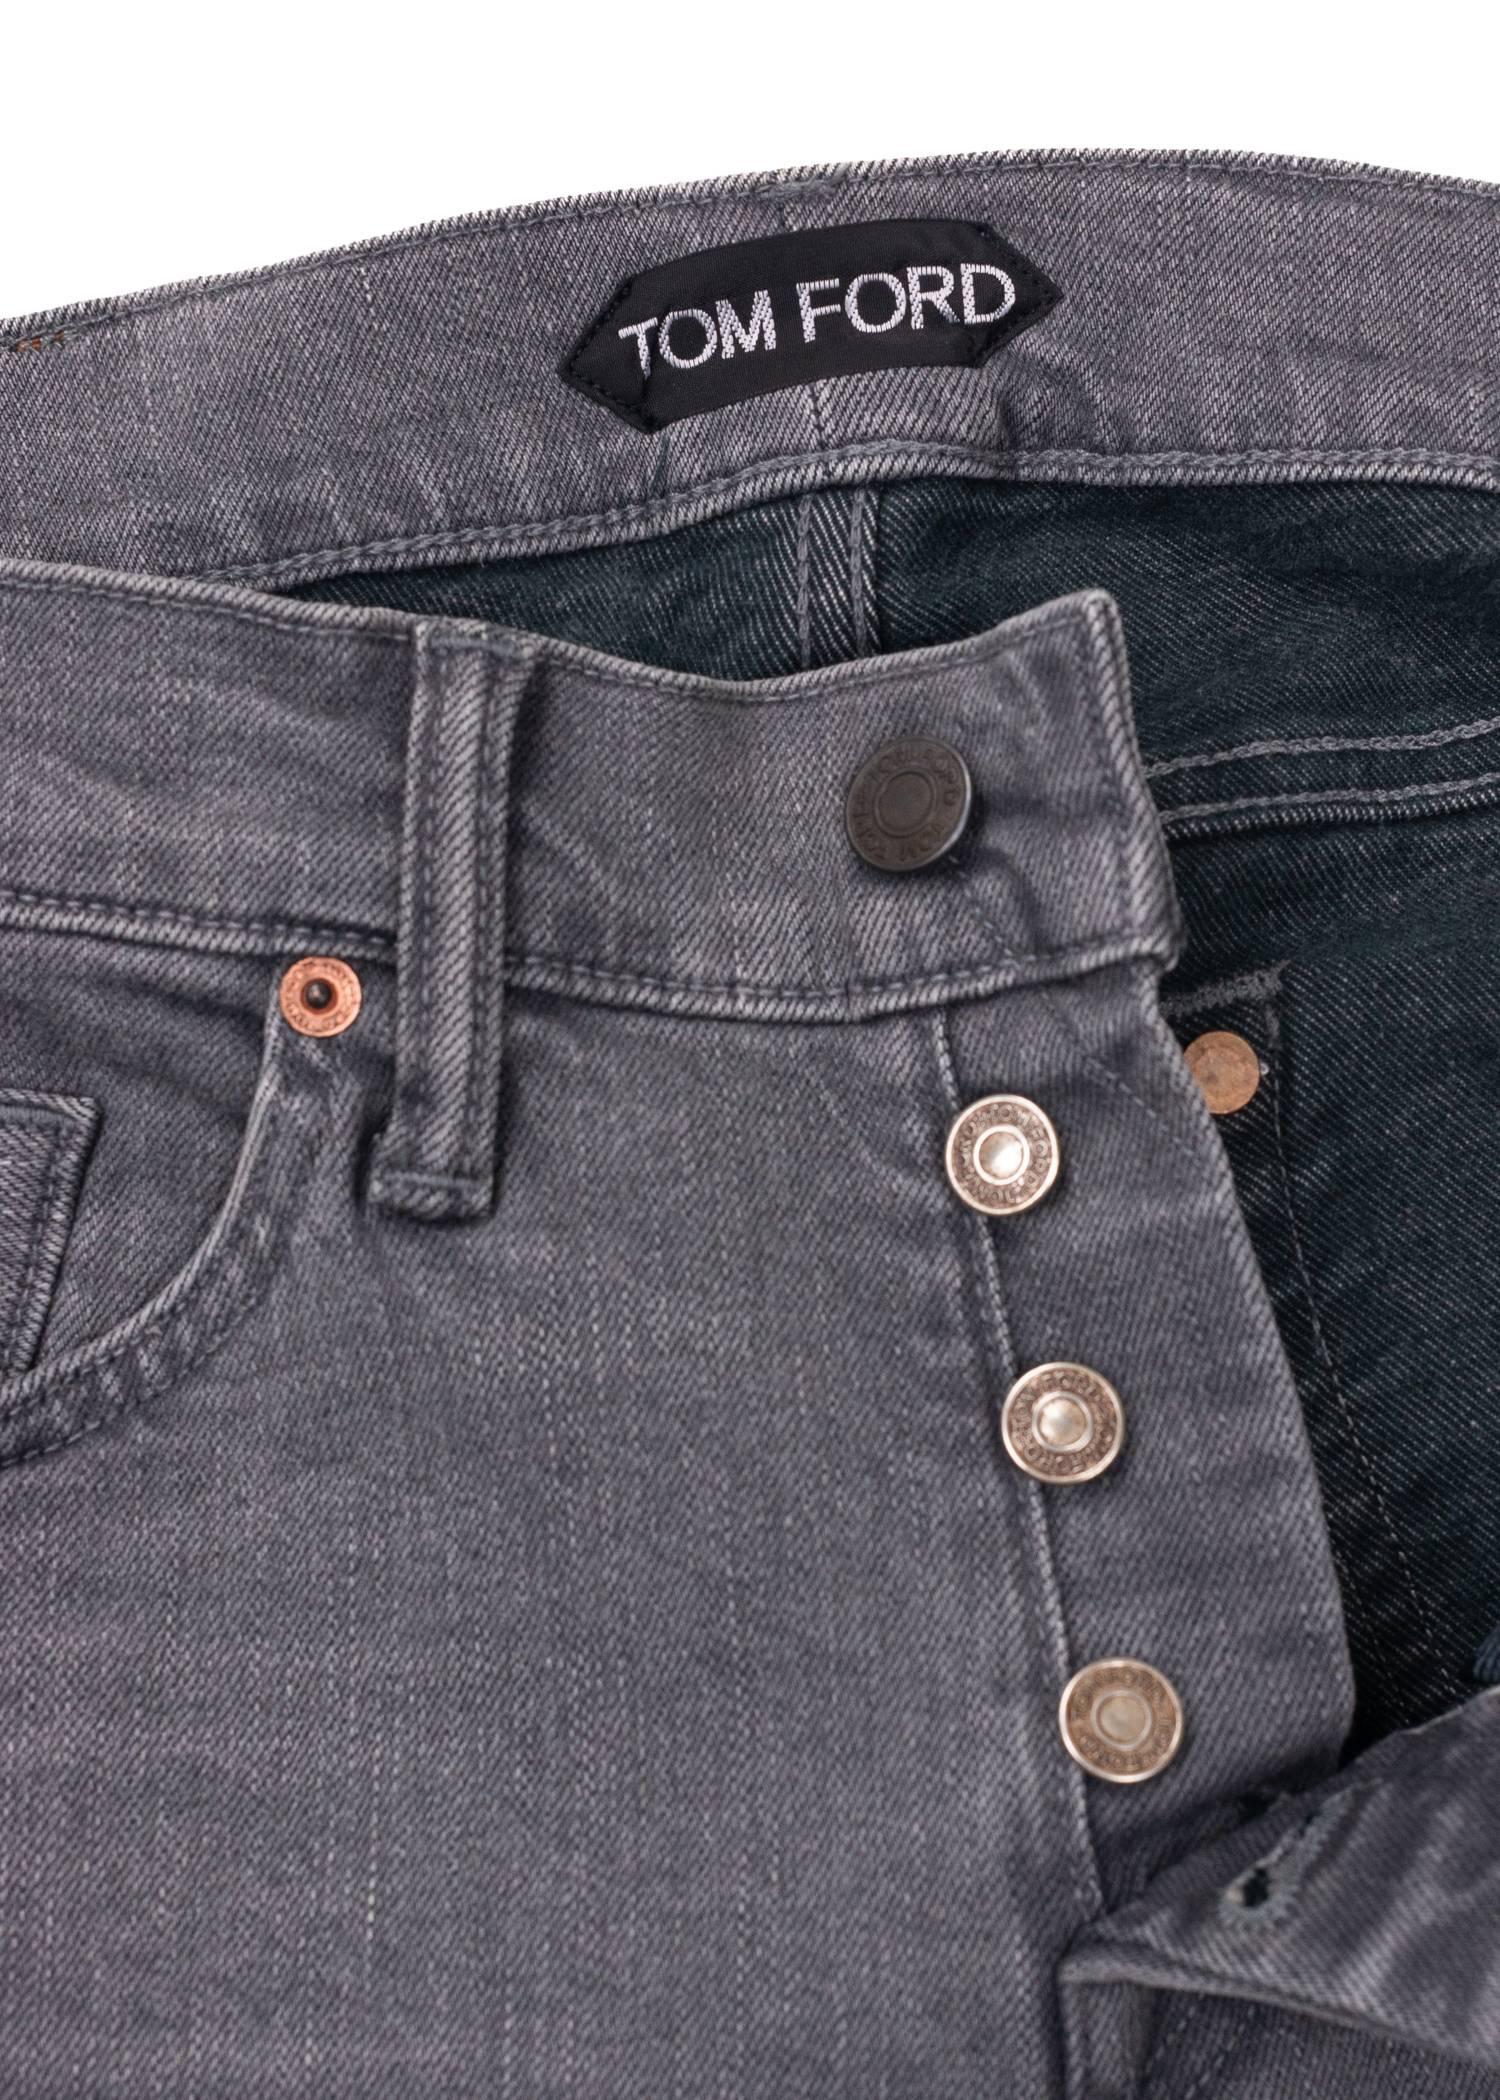 Gray Tom Ford Selvedge Denim Jeans Medium Grey Wash Size 33 Slim Fit Model  